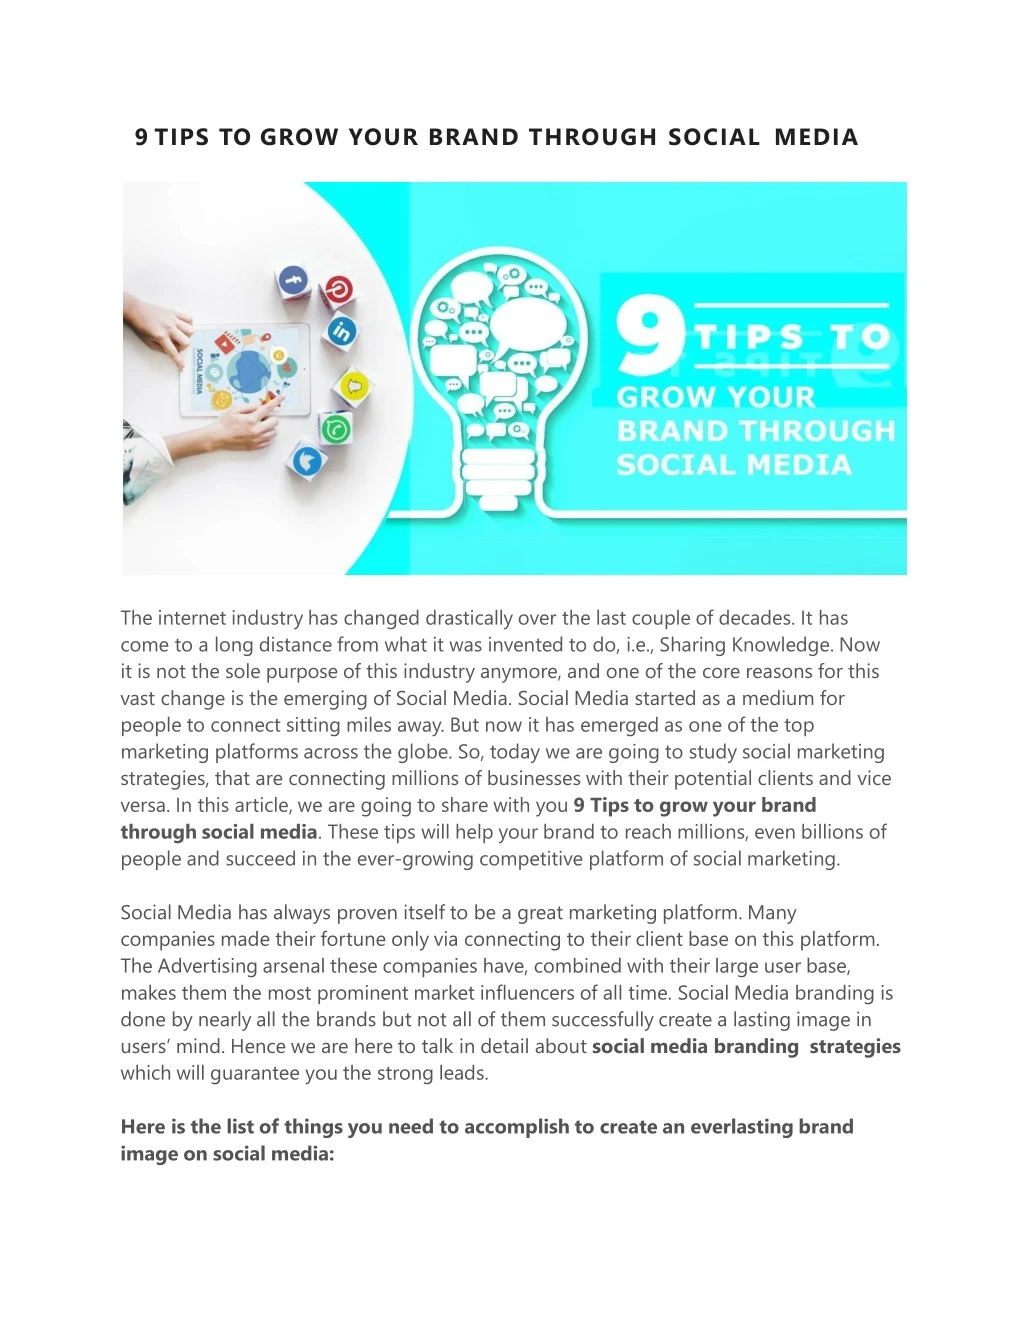 9 tips to grow your brand through social media